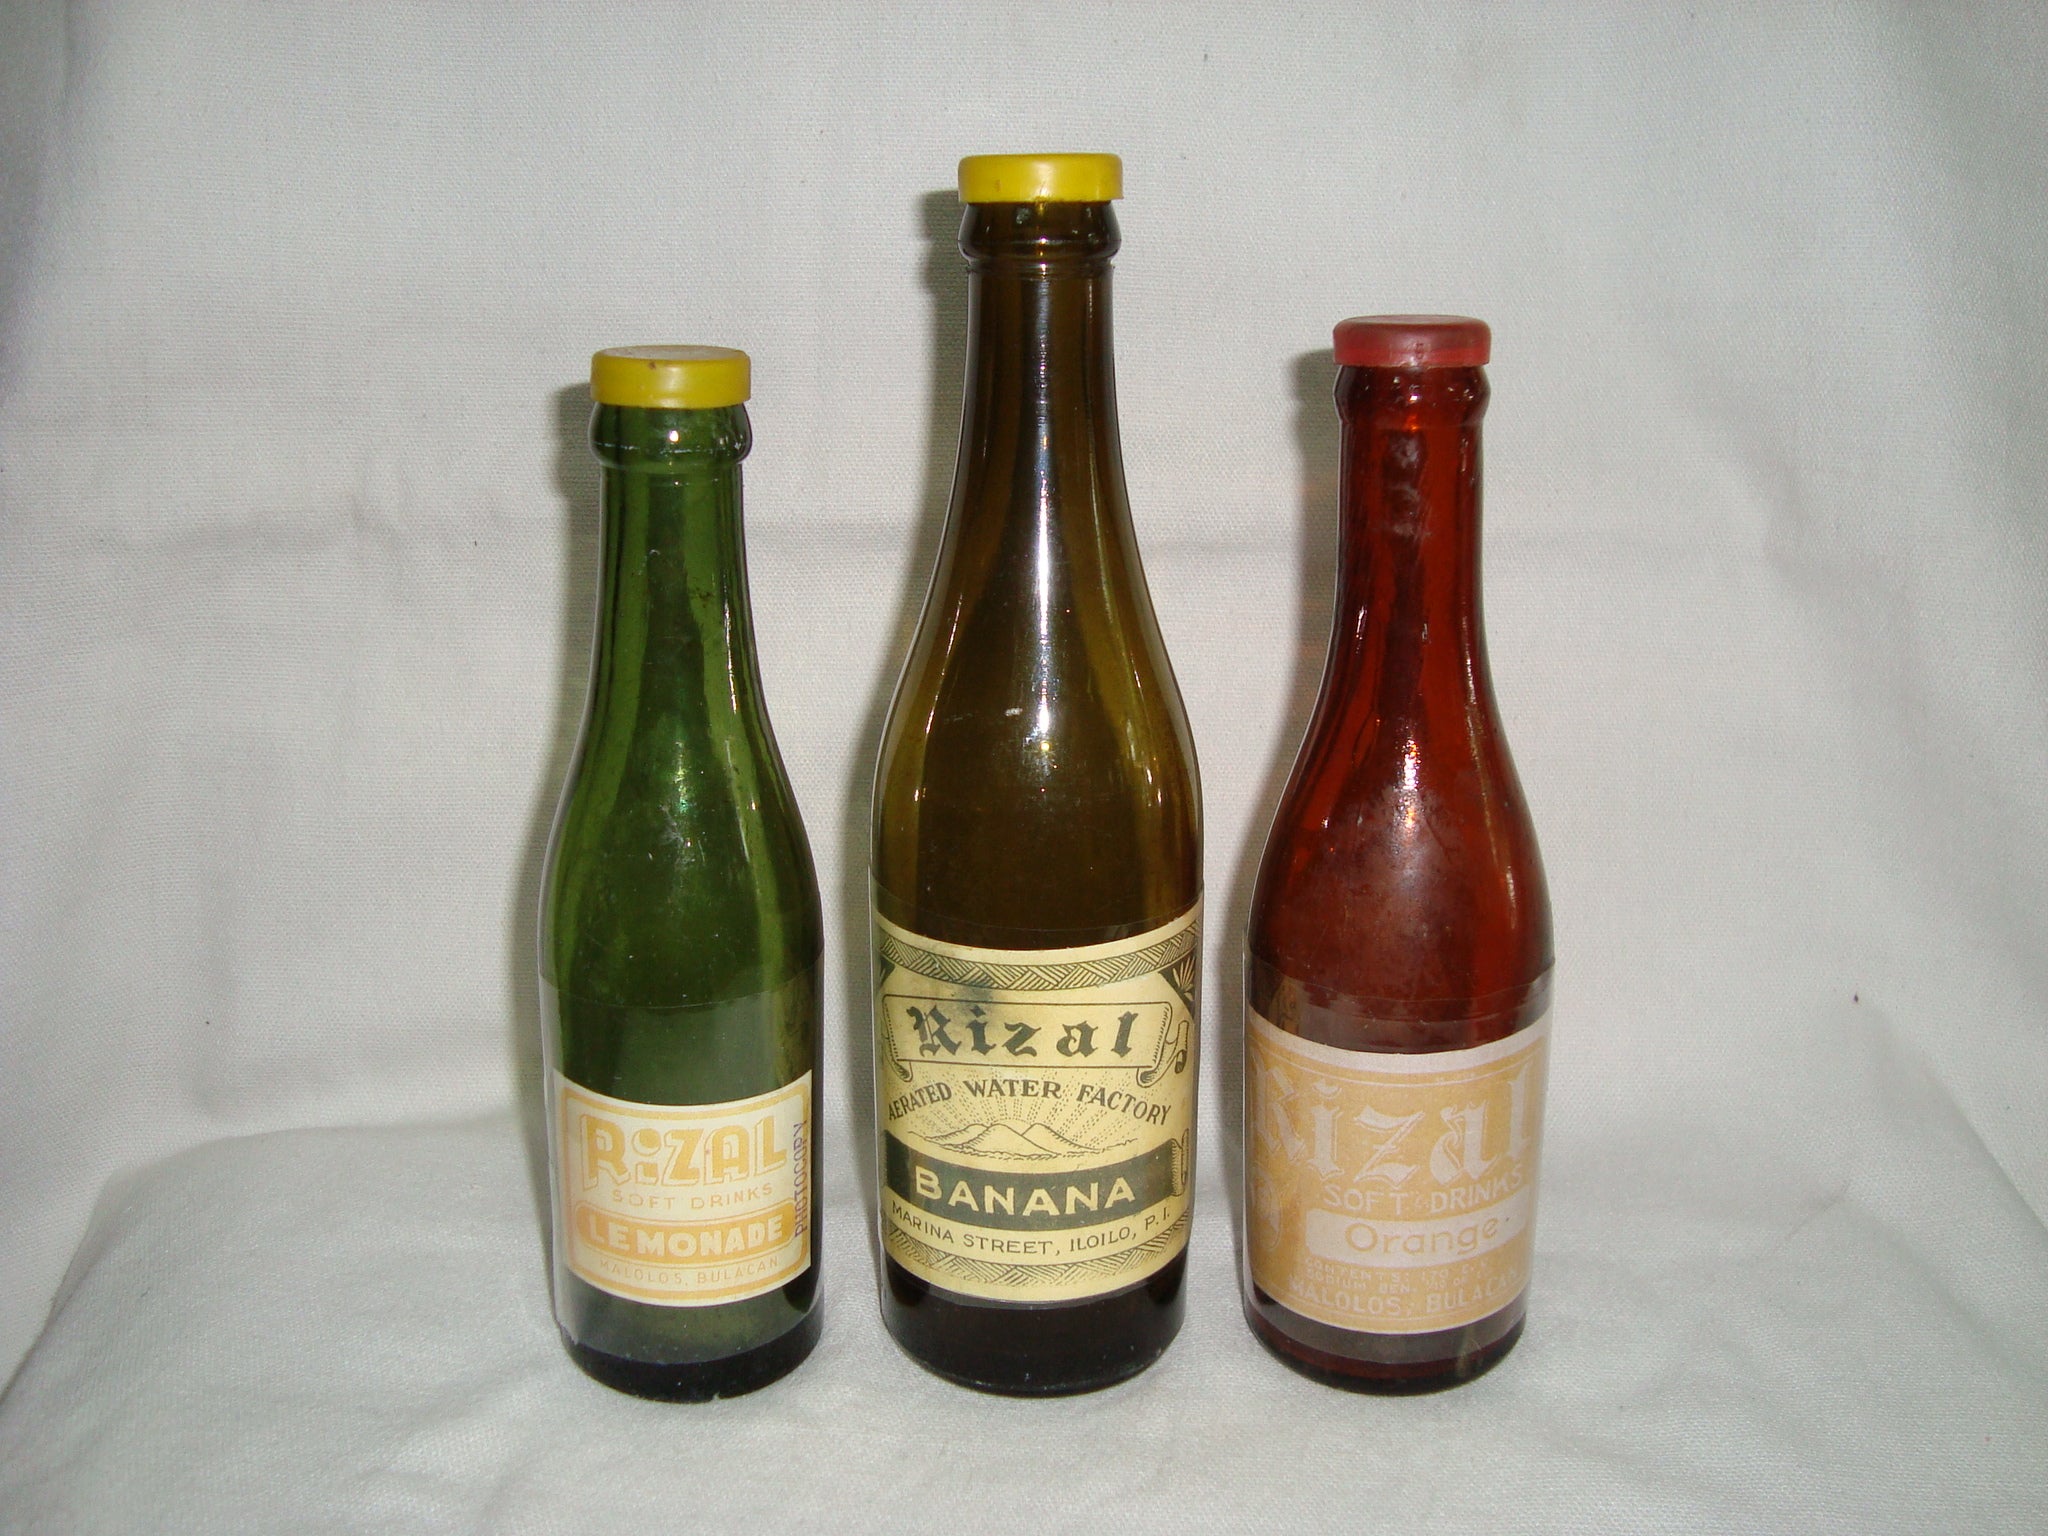 Rizal Paper Label Bottles (Photocopy)